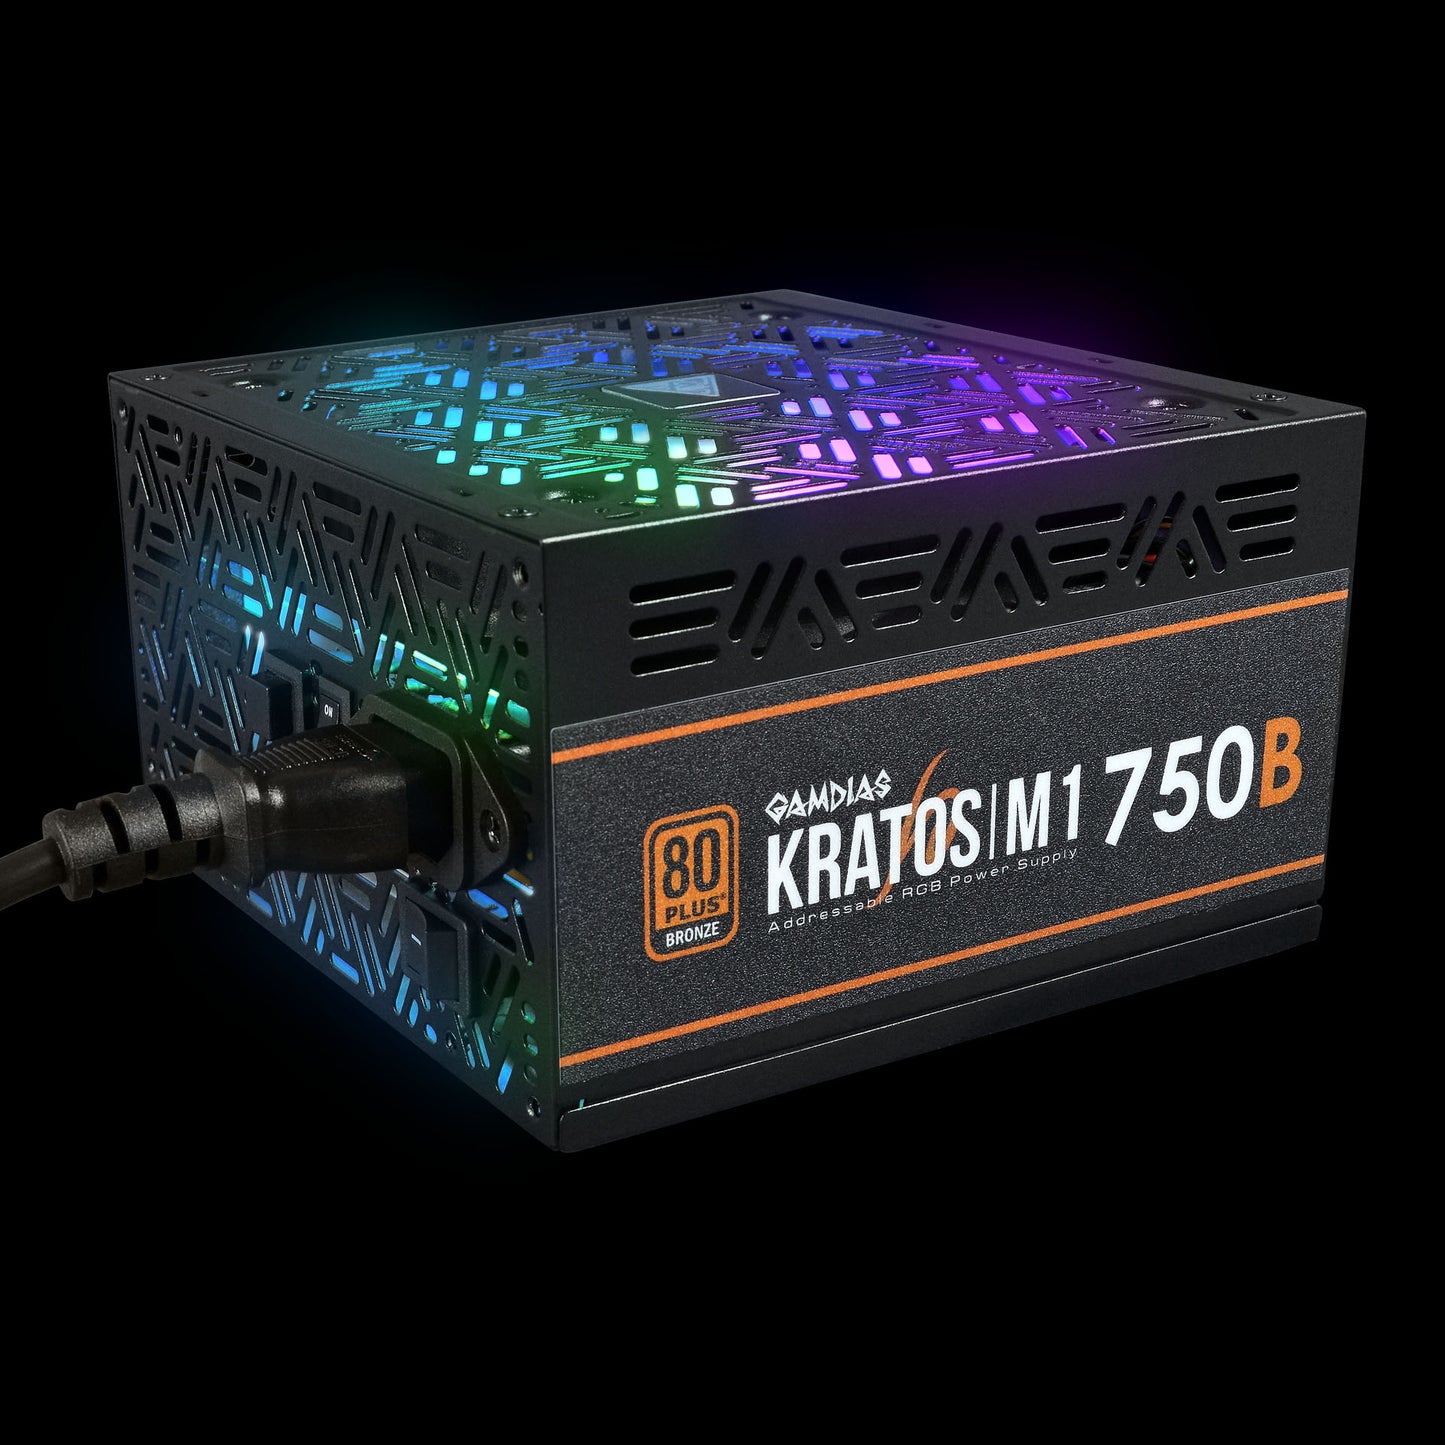 Gamdias Kratos M1 750B 750W Power Supply with 80 PLUS Bronze Efficiency and Neon-Flex RGB Lighting